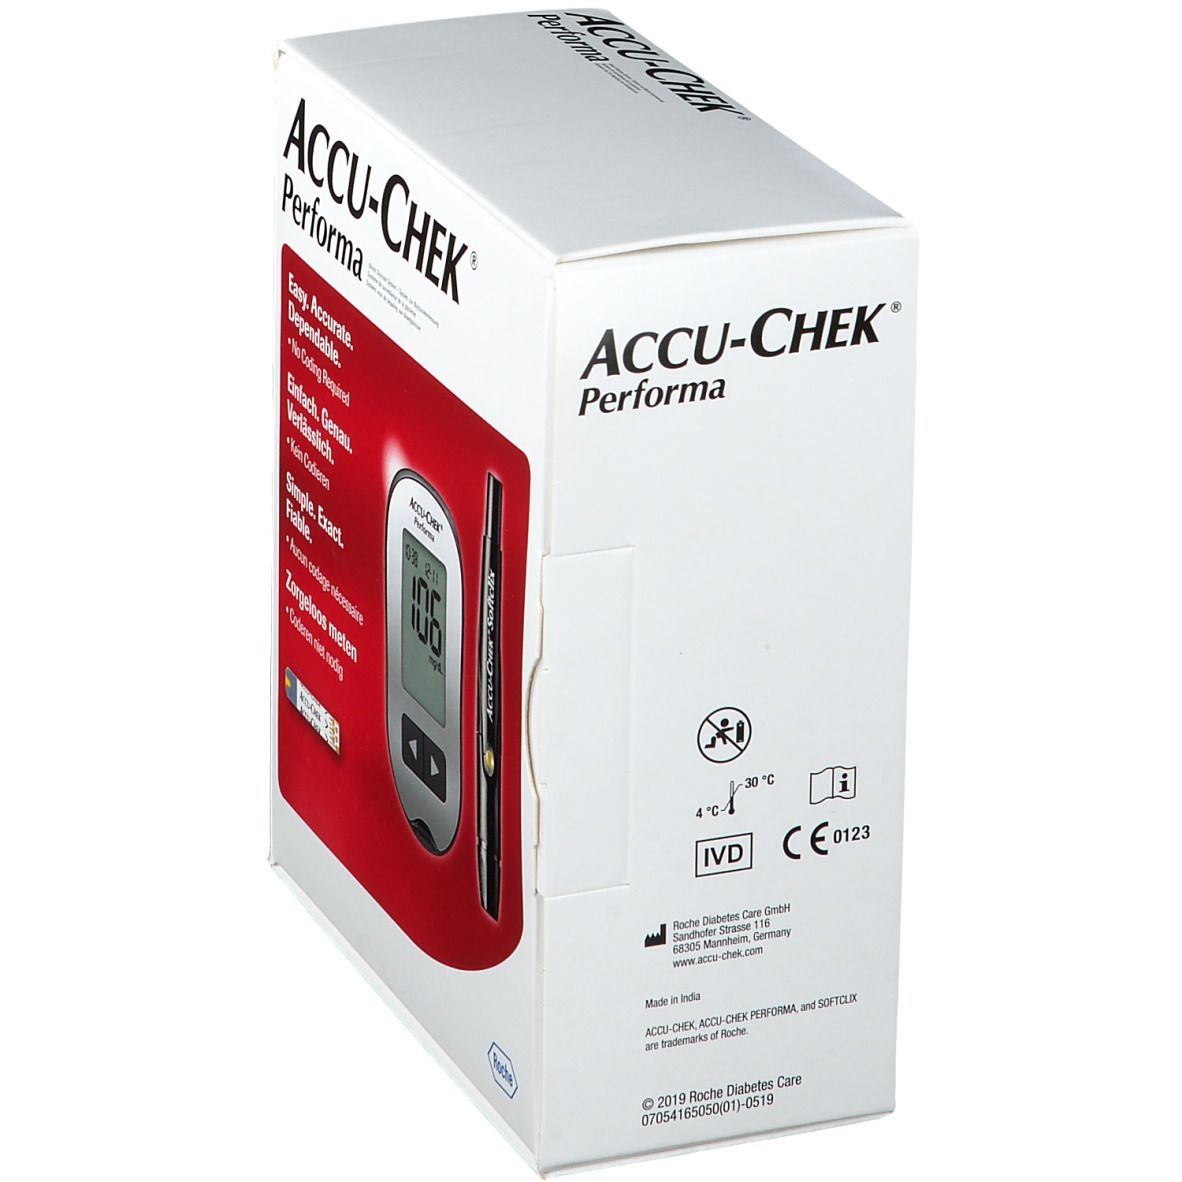 ACCU-CHEK® Performa mg/dL